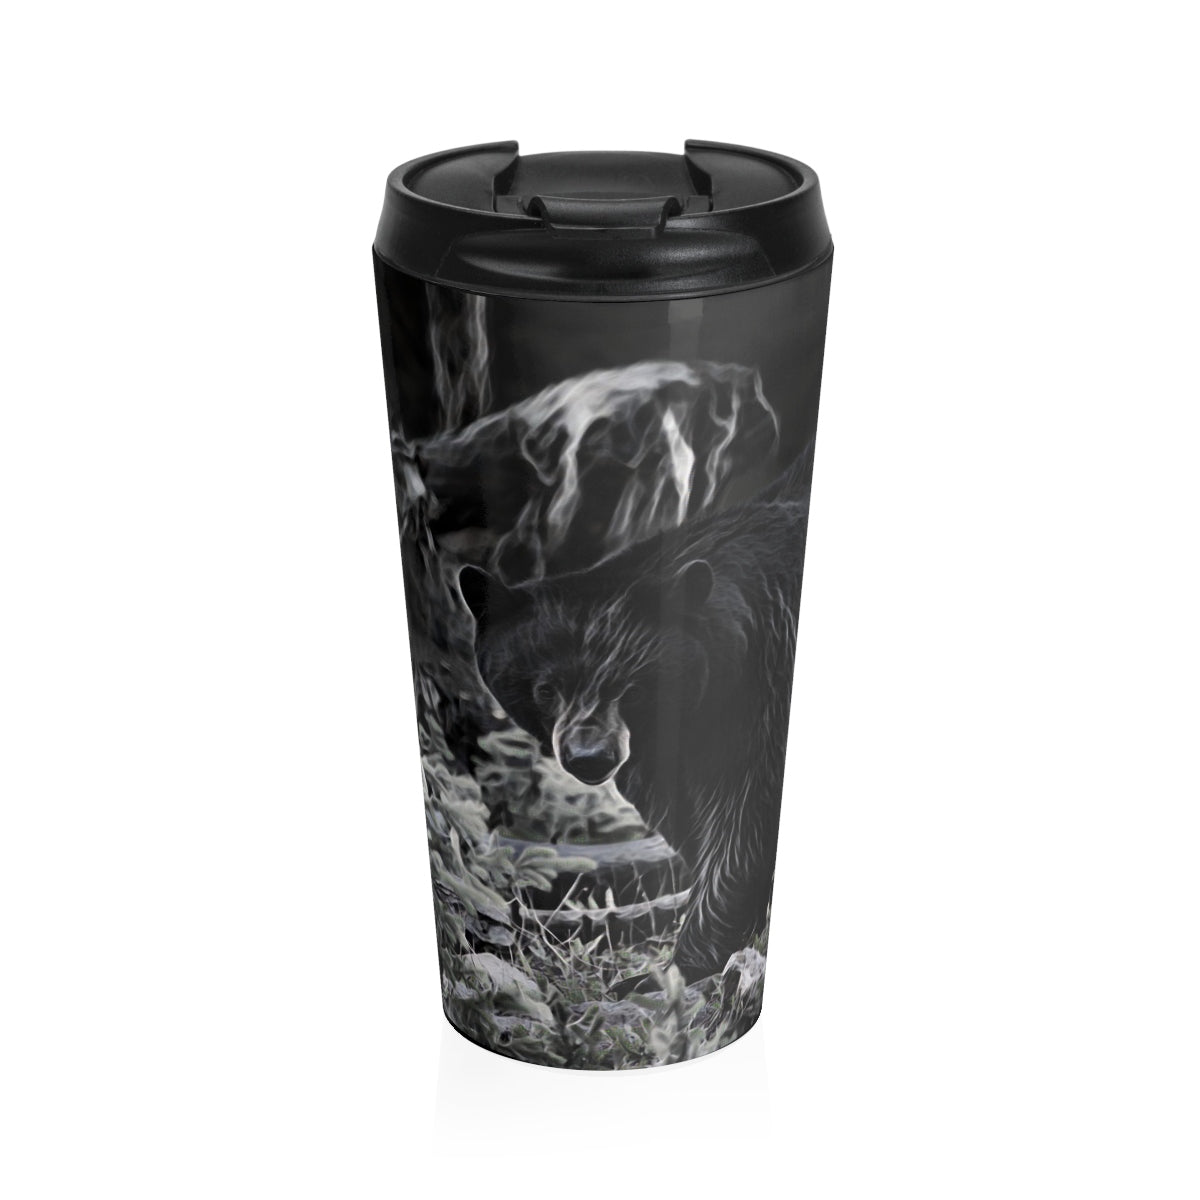 Black bear wildlife coffee mug, stainless steel travel mug